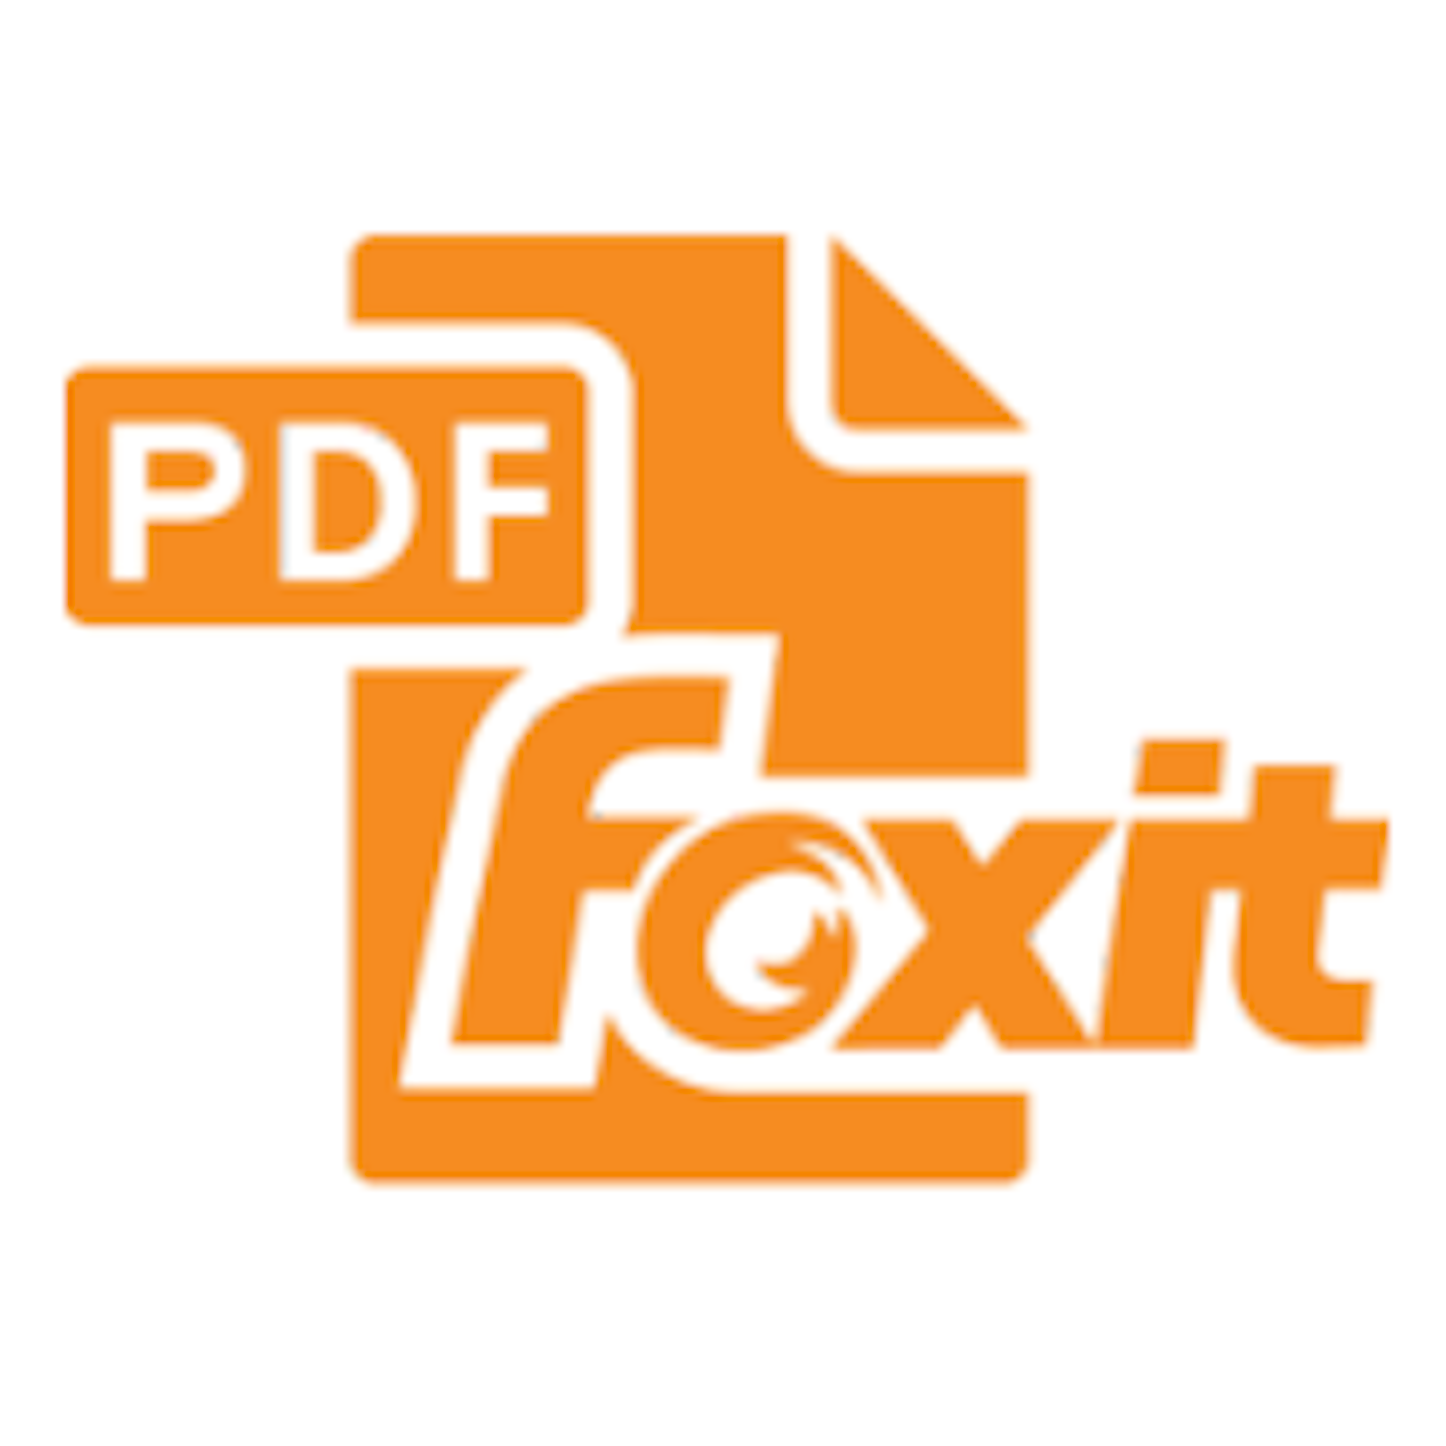 foxit pdf reader mac free download